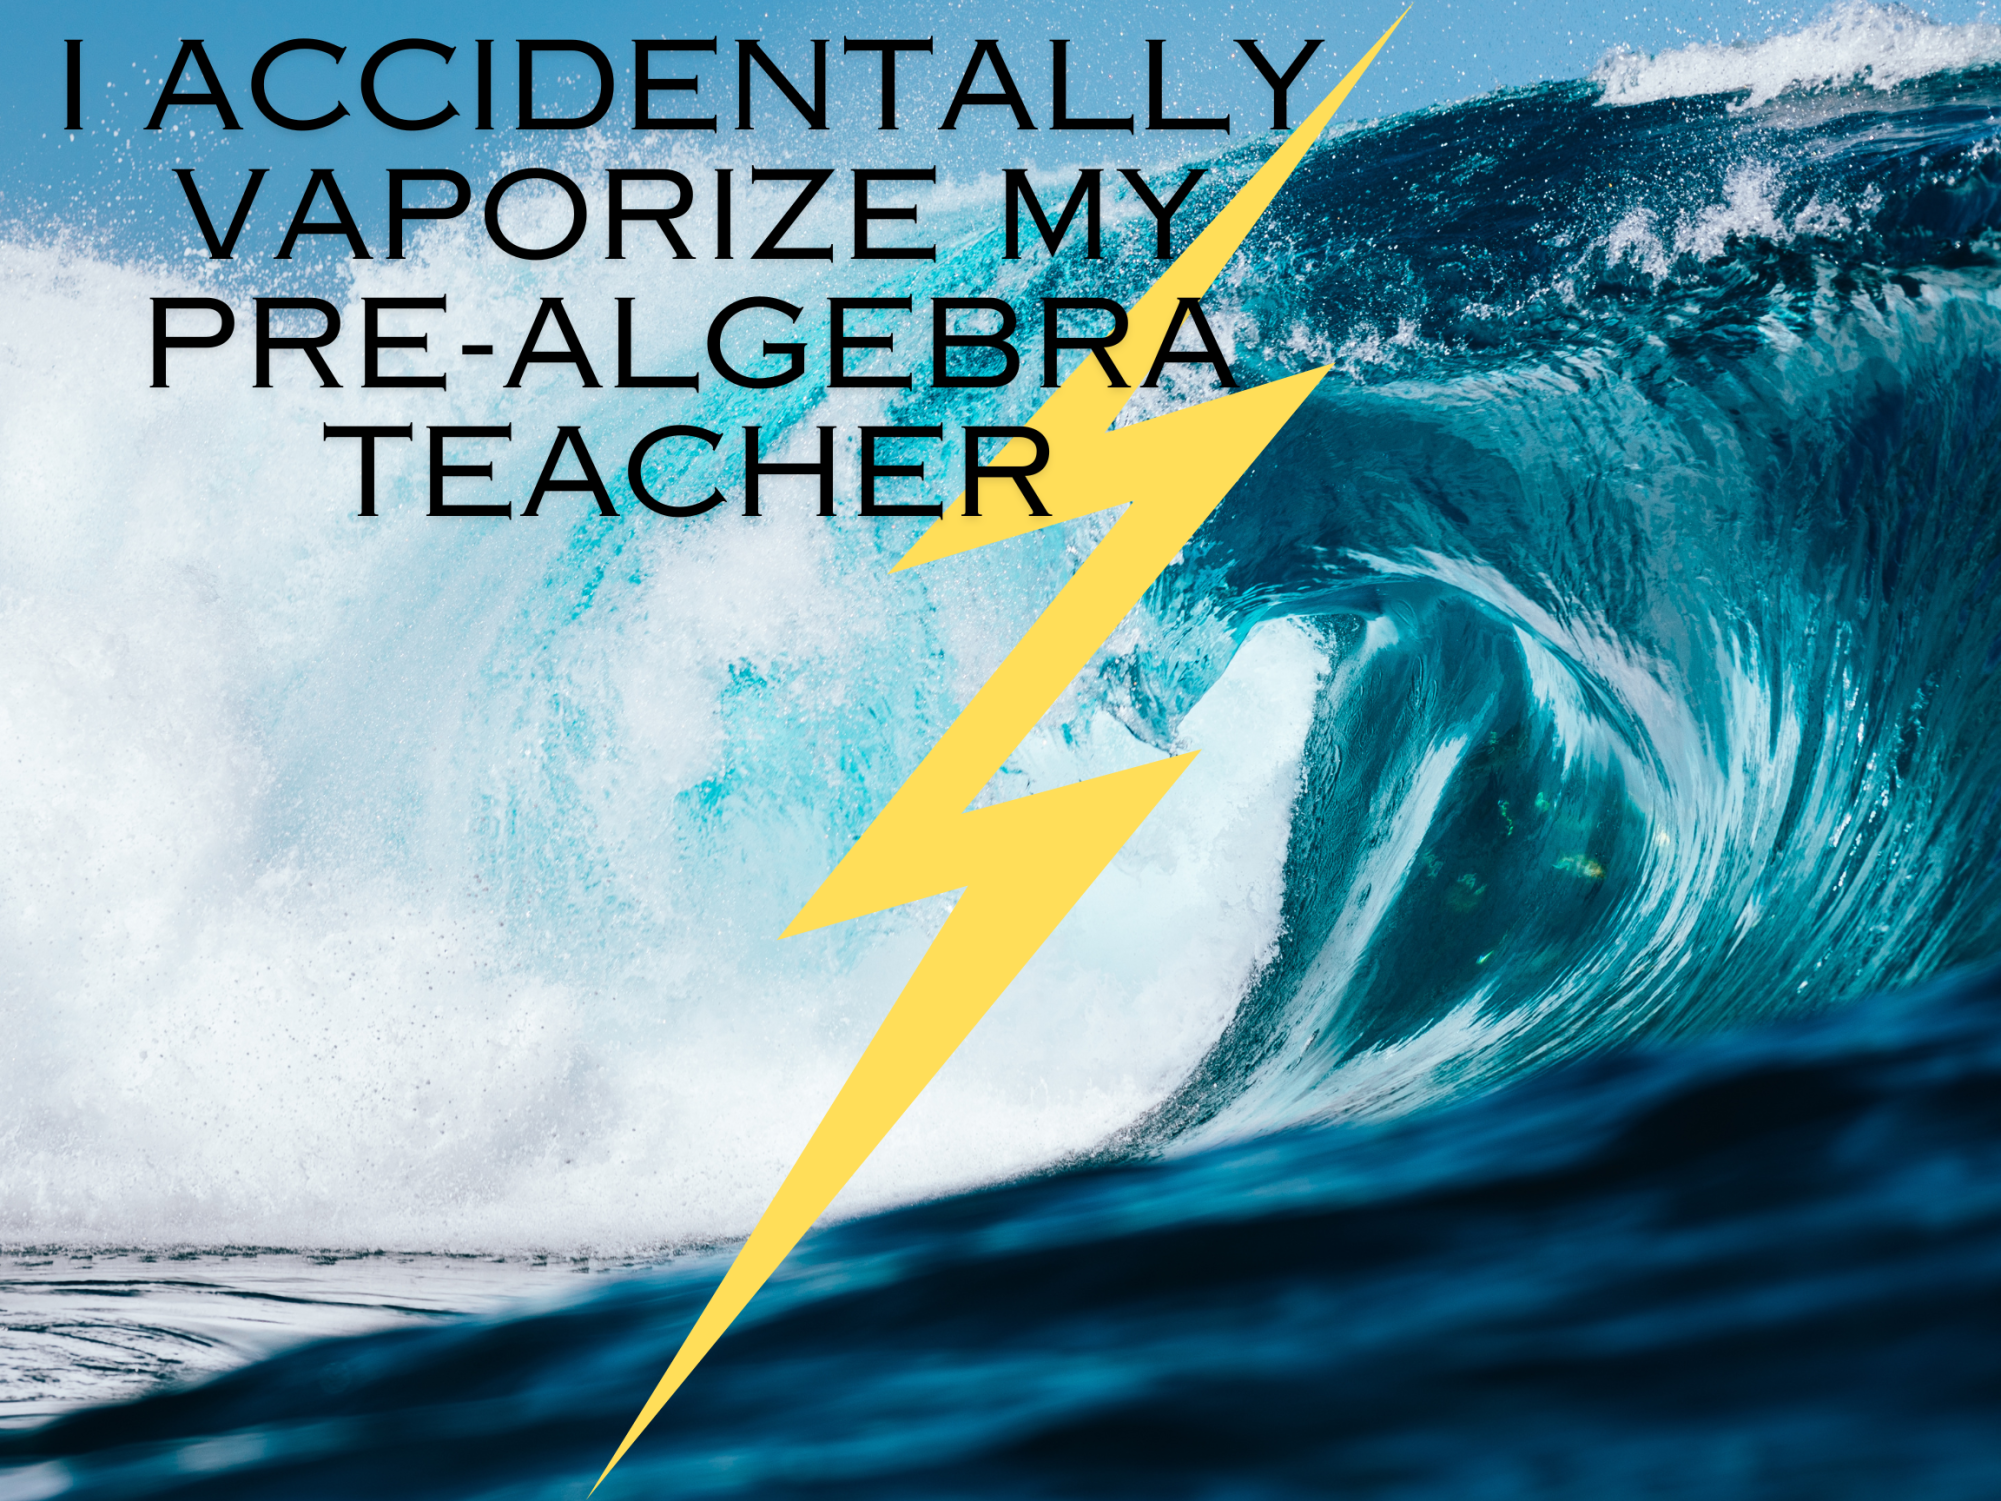 Episode One: I Accidentally Vaporize My Pre-Algebra Teacher